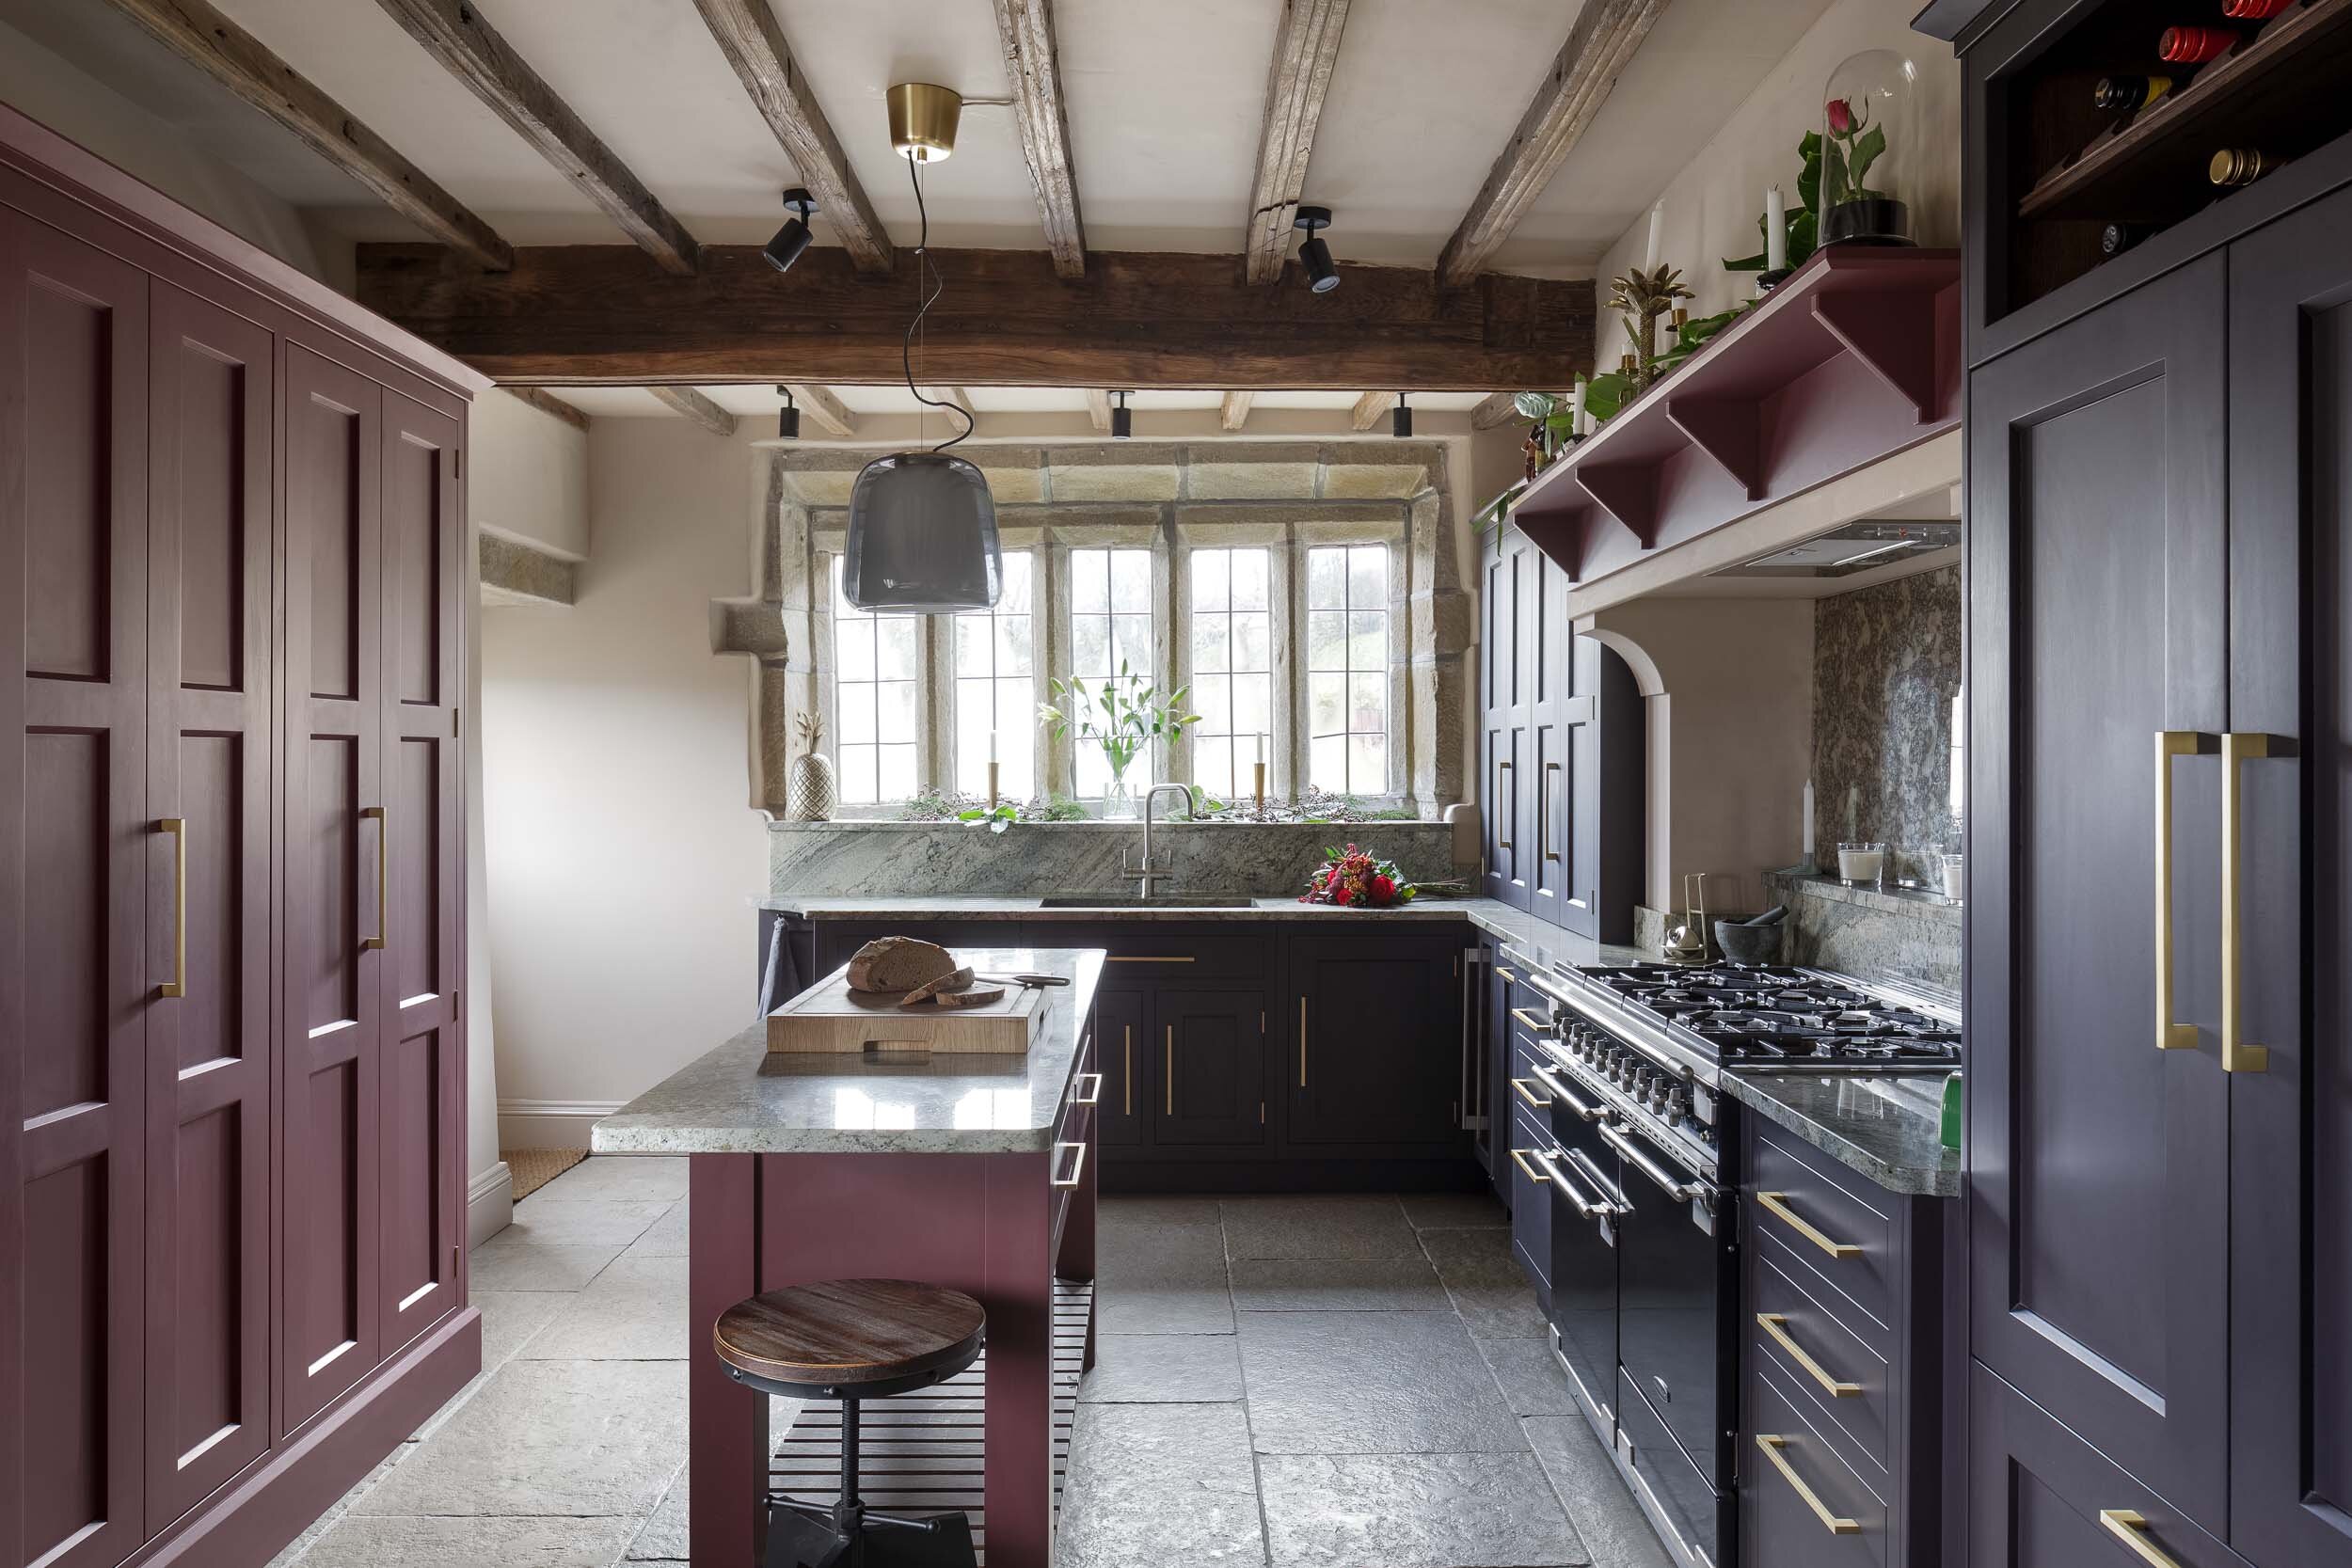 residential kitchen blue red farmhouse conversion interior west yorkshire.jpg